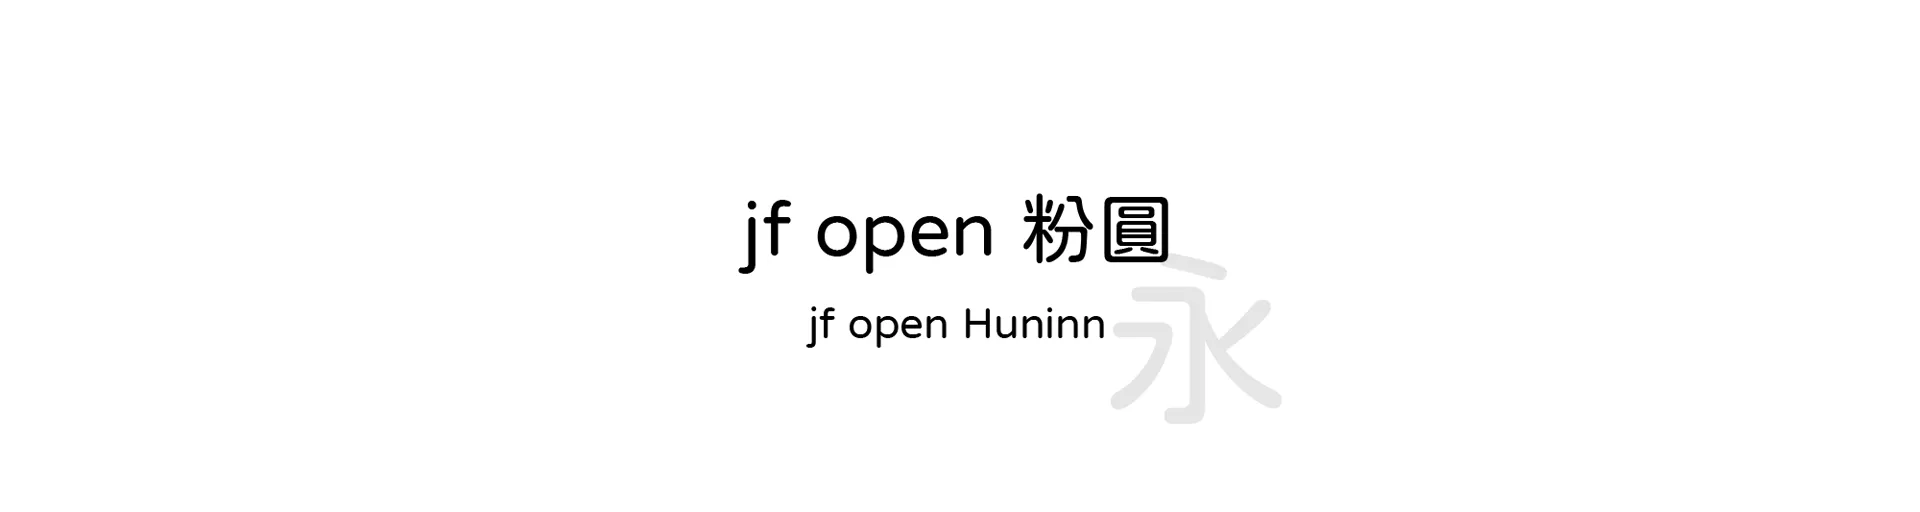 jf open Huninn